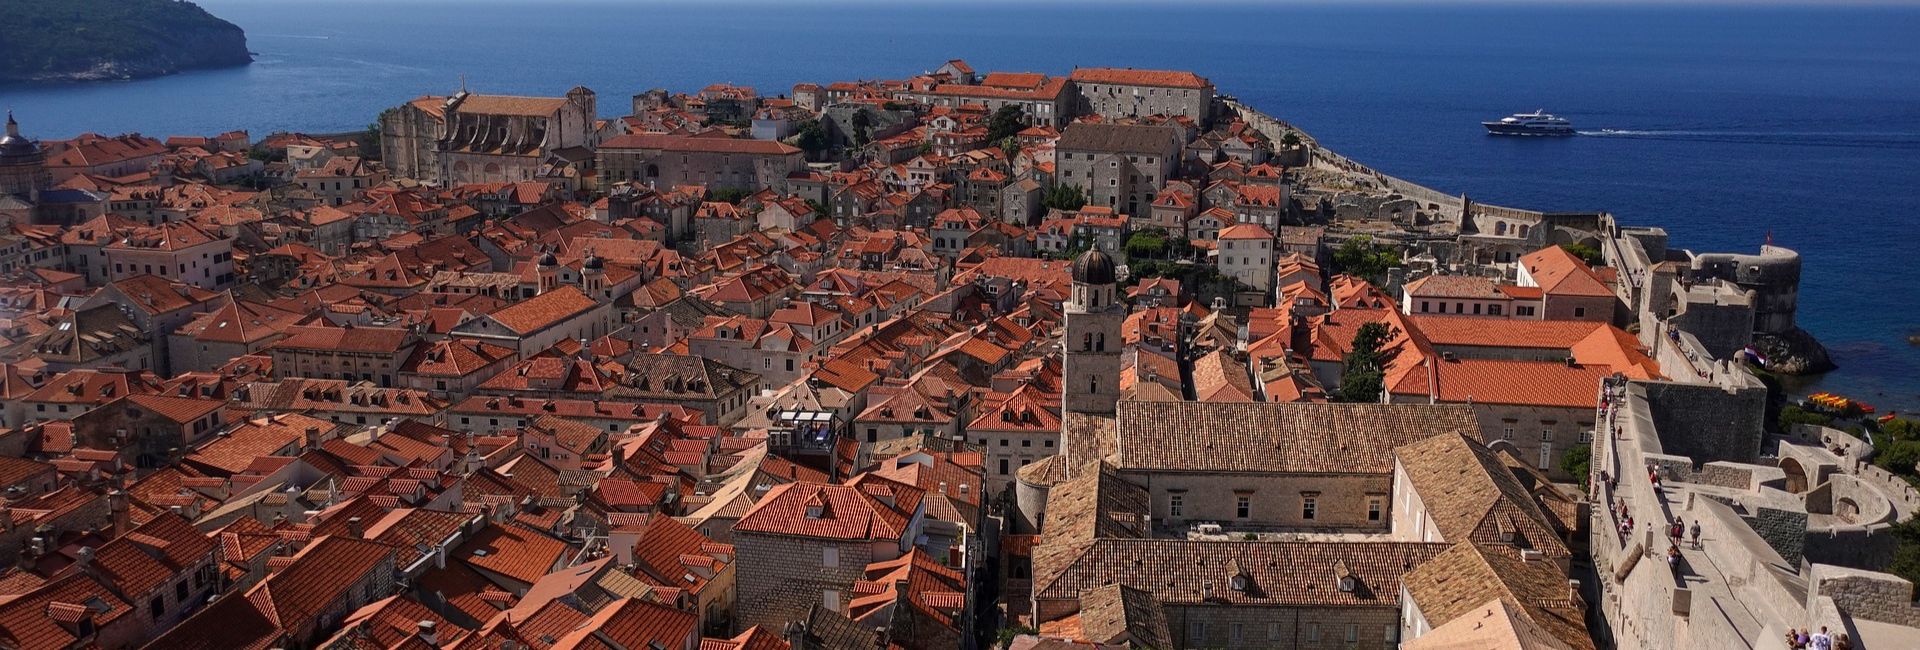 casco antiguo de Dubrovnik